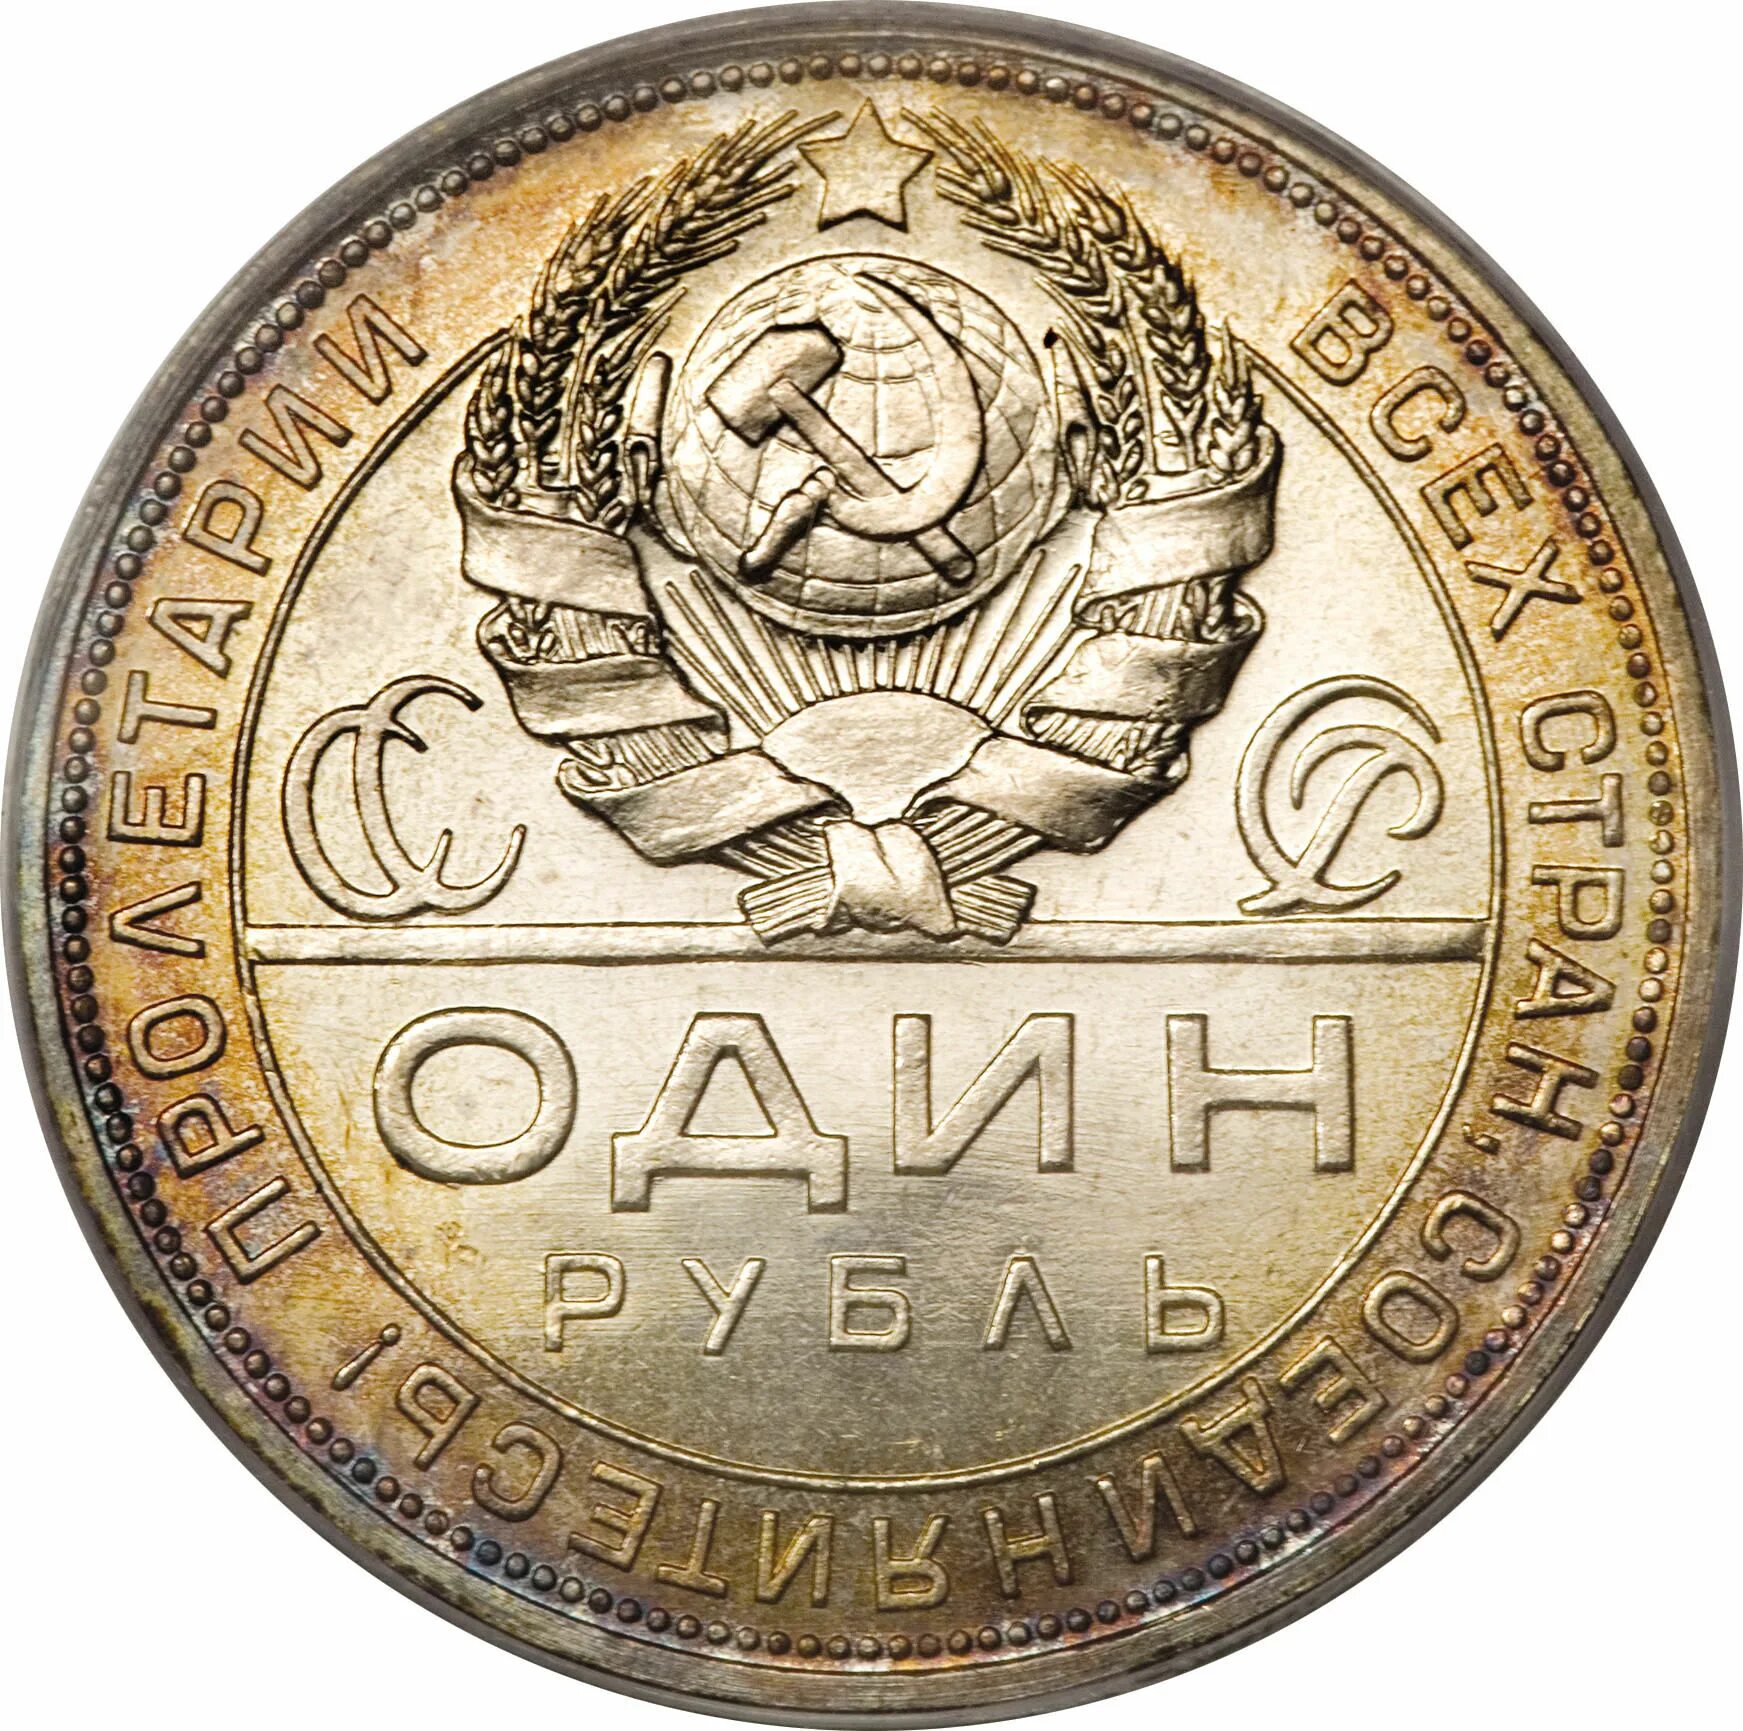 Монета рубл. Советский рубль без фона. Рубл. Монета СССР соединяйтесь.